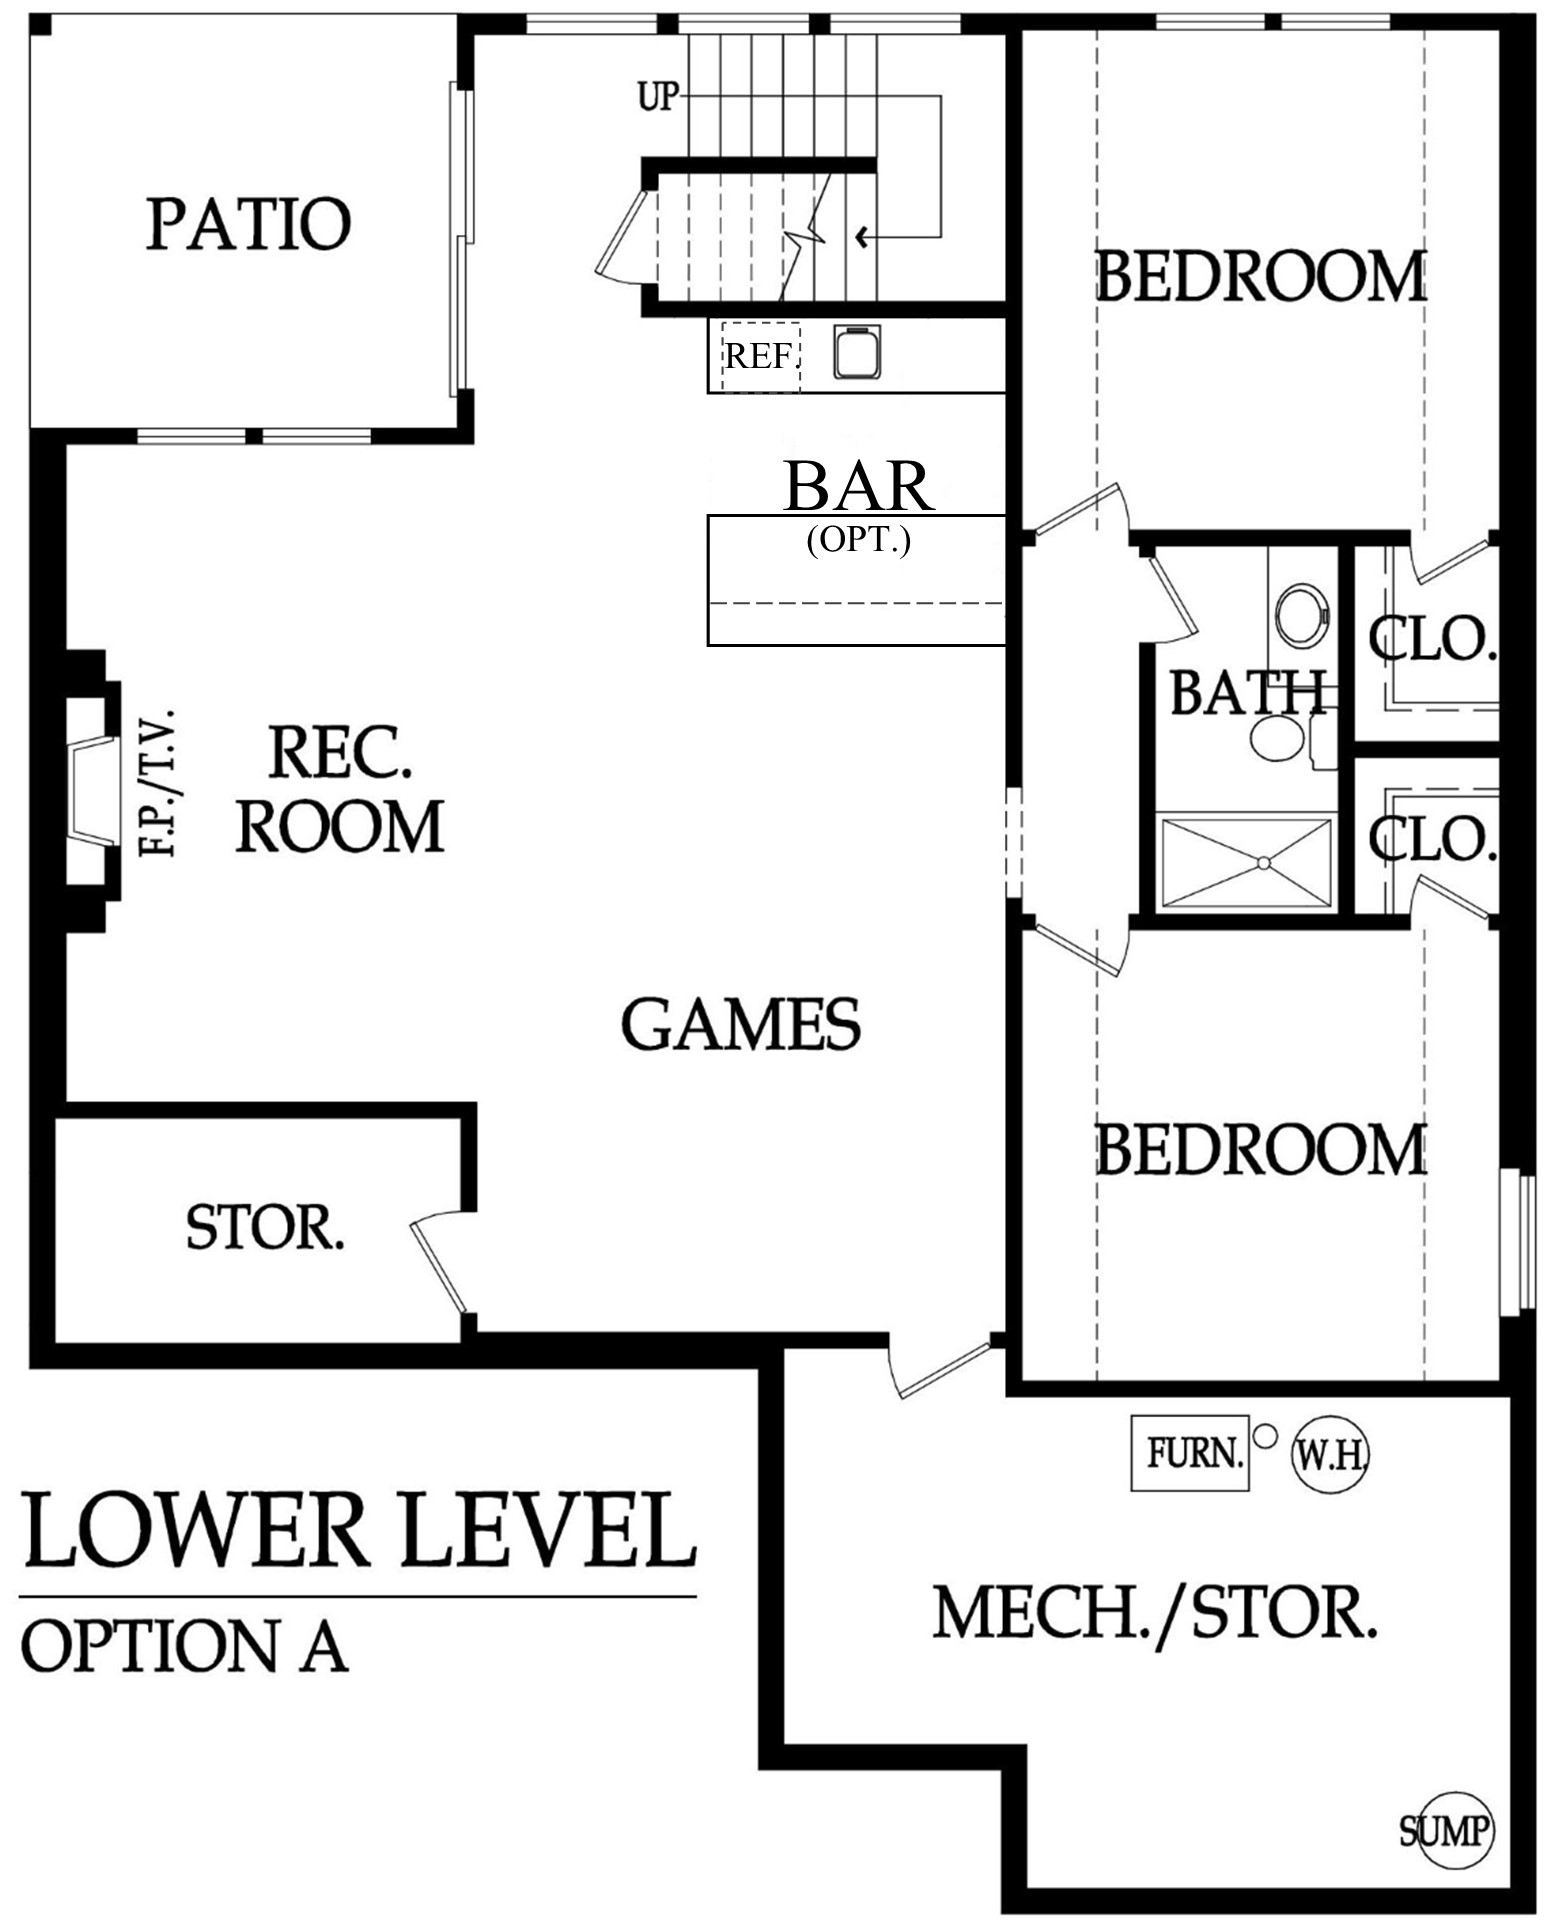 The Truman reverse 1.5-story lower level floor plan for Cadence Villas.